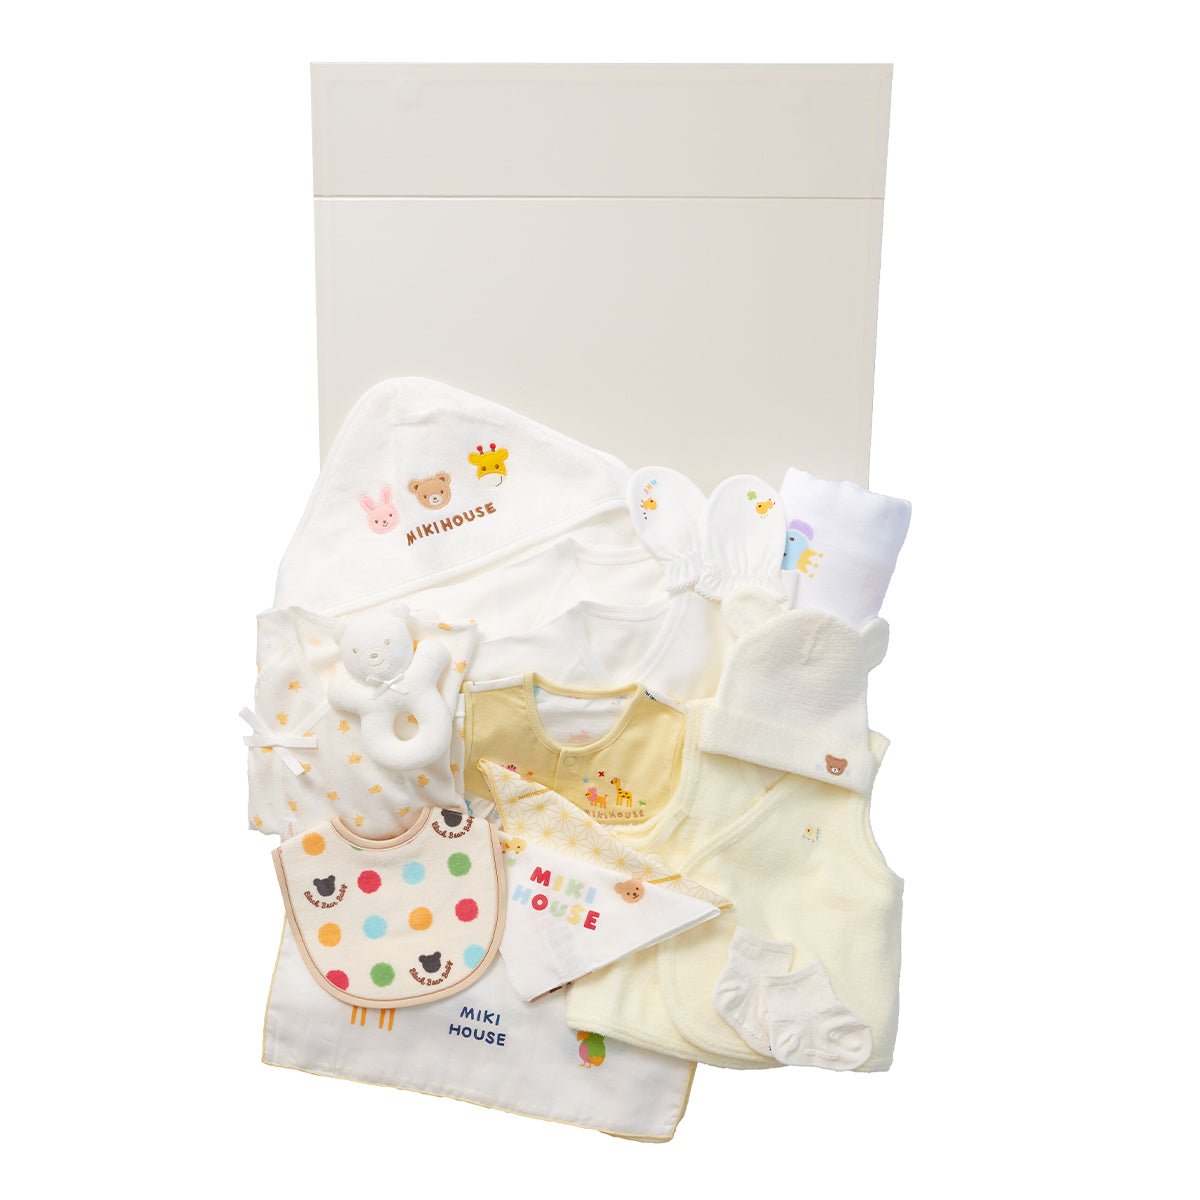 Baby Starter Kit (Yellow) with FREE Baby Club Membership - MIKI HOUSE USA